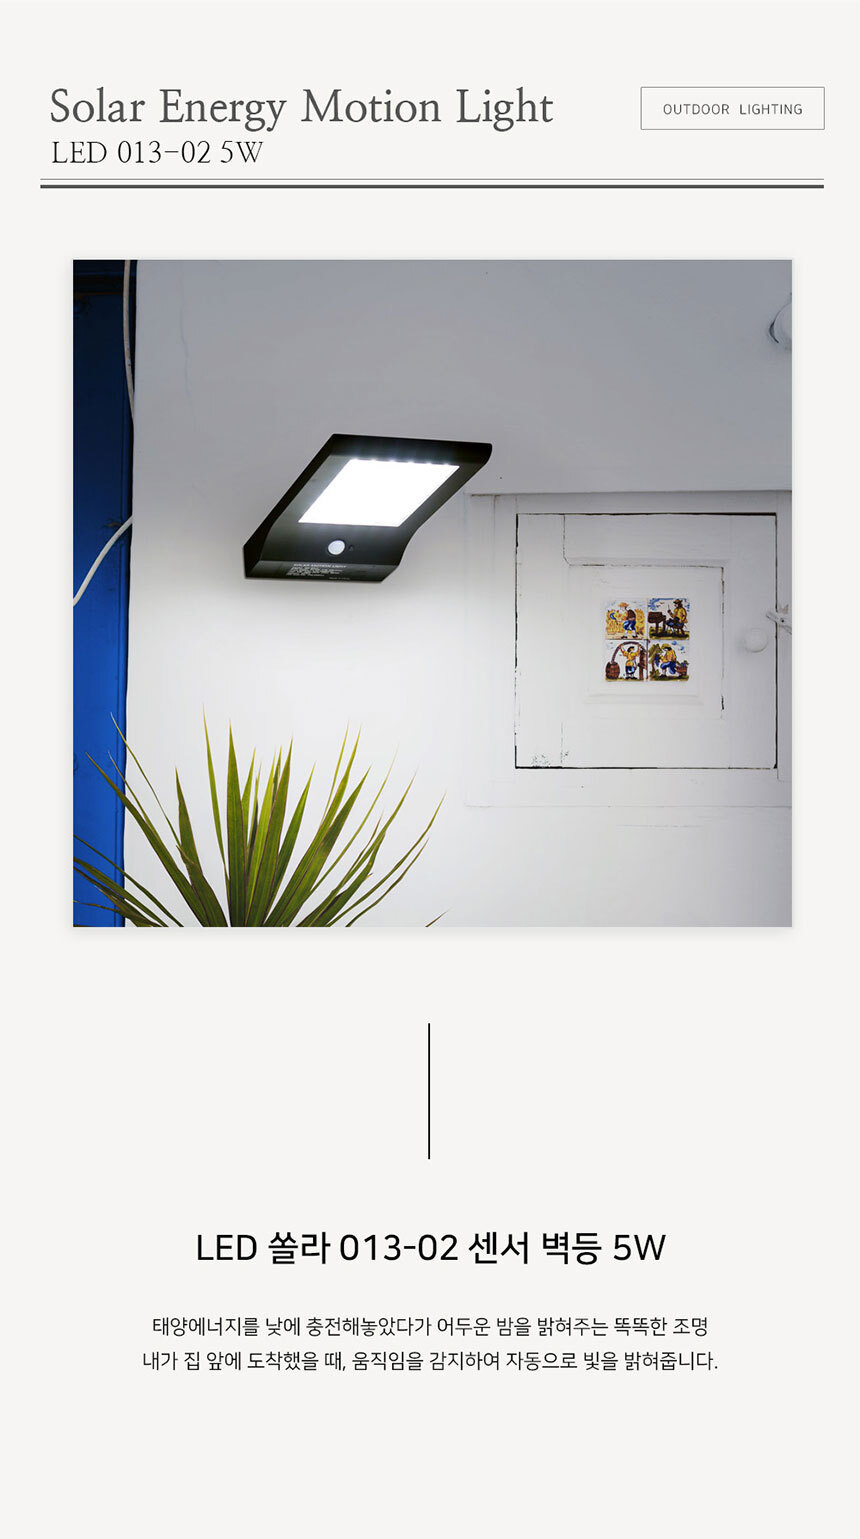 LED 쏠라 013-02 센서 벽등 3W

낮에 태양에너지를 충전하였다가 어두운 밤을 밝혀주는 똑똑한 벽등.
